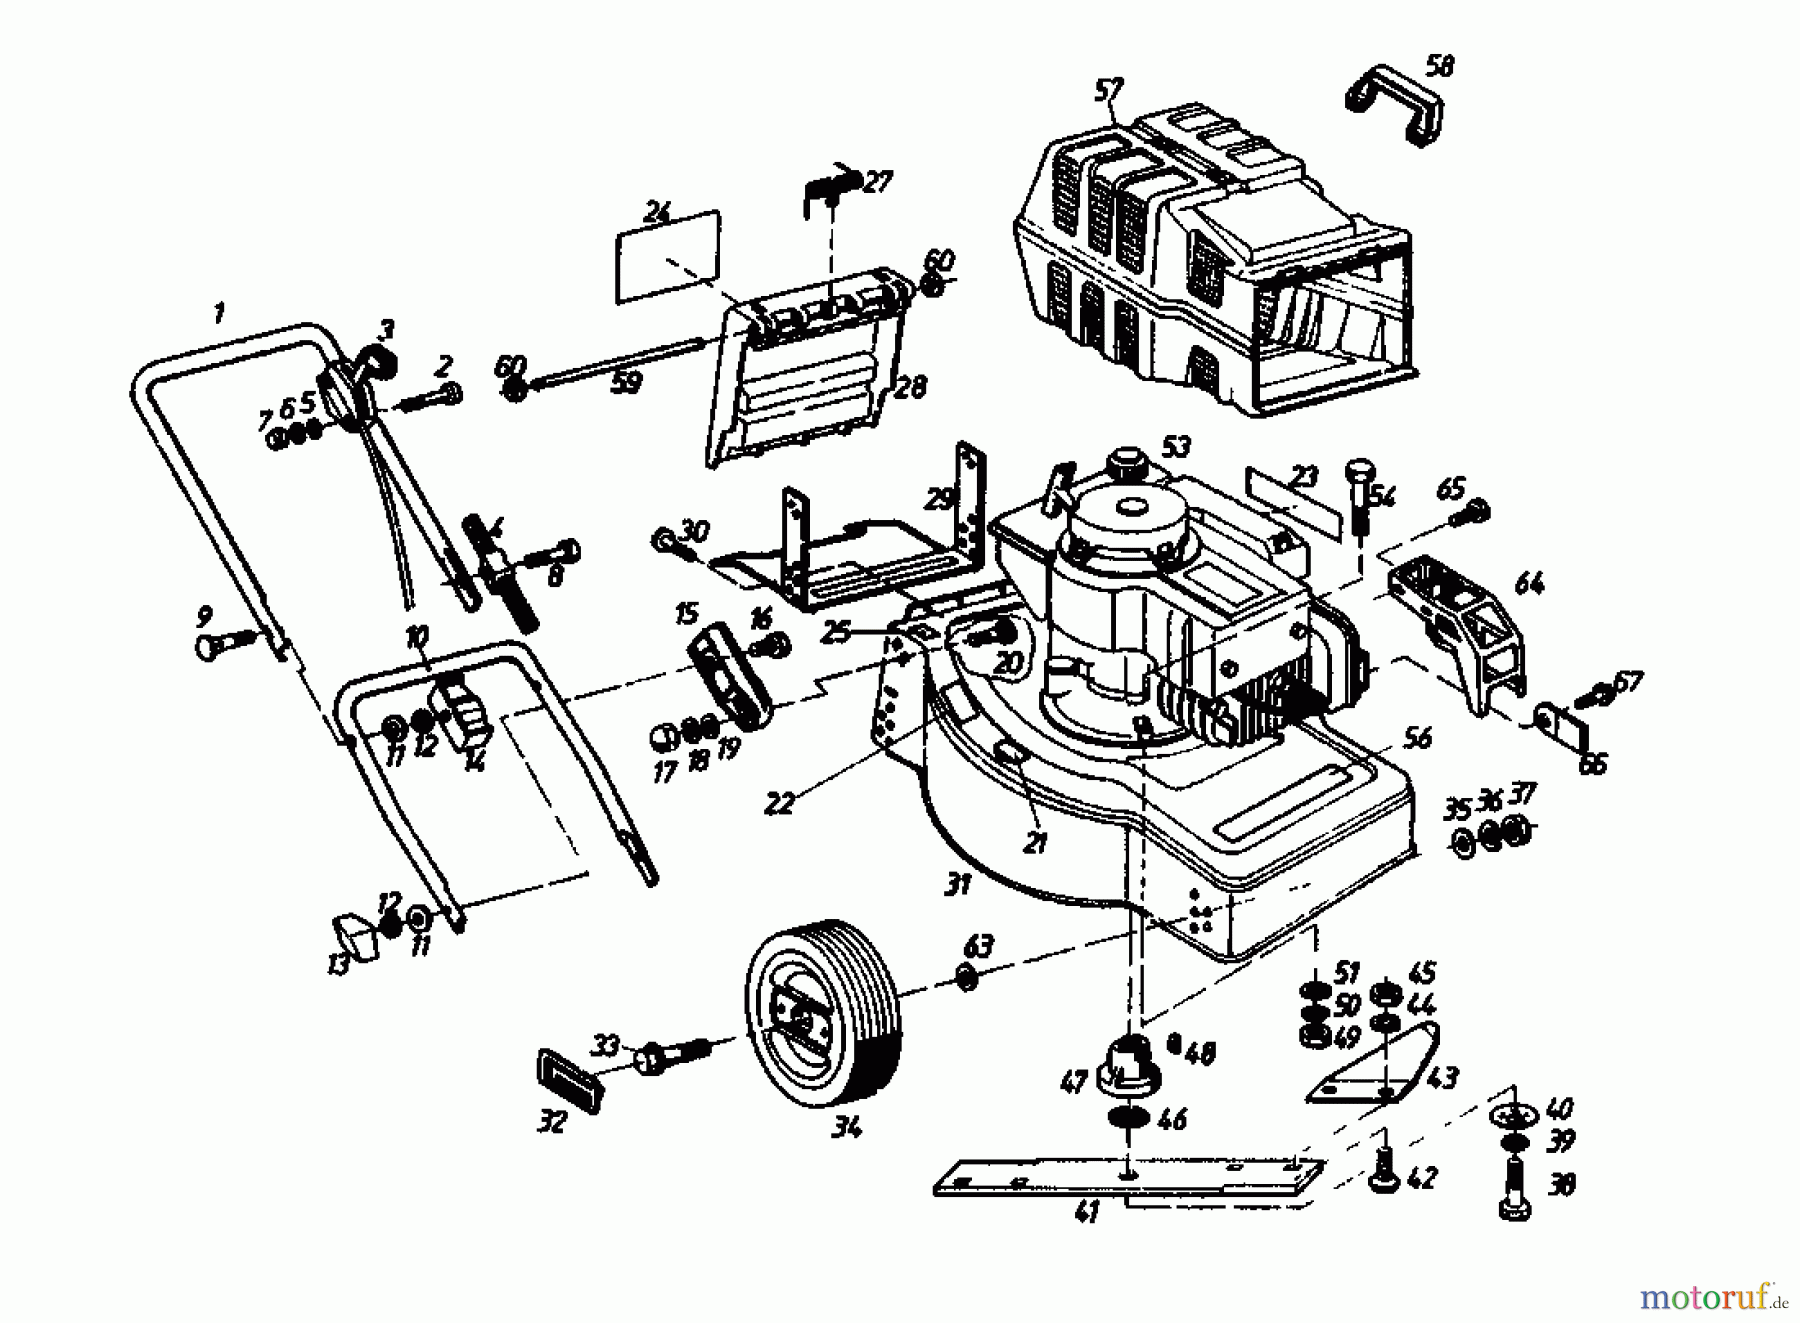  Gutbrod Petrol mower TURBO B 02893.01  (1988) Basic machine